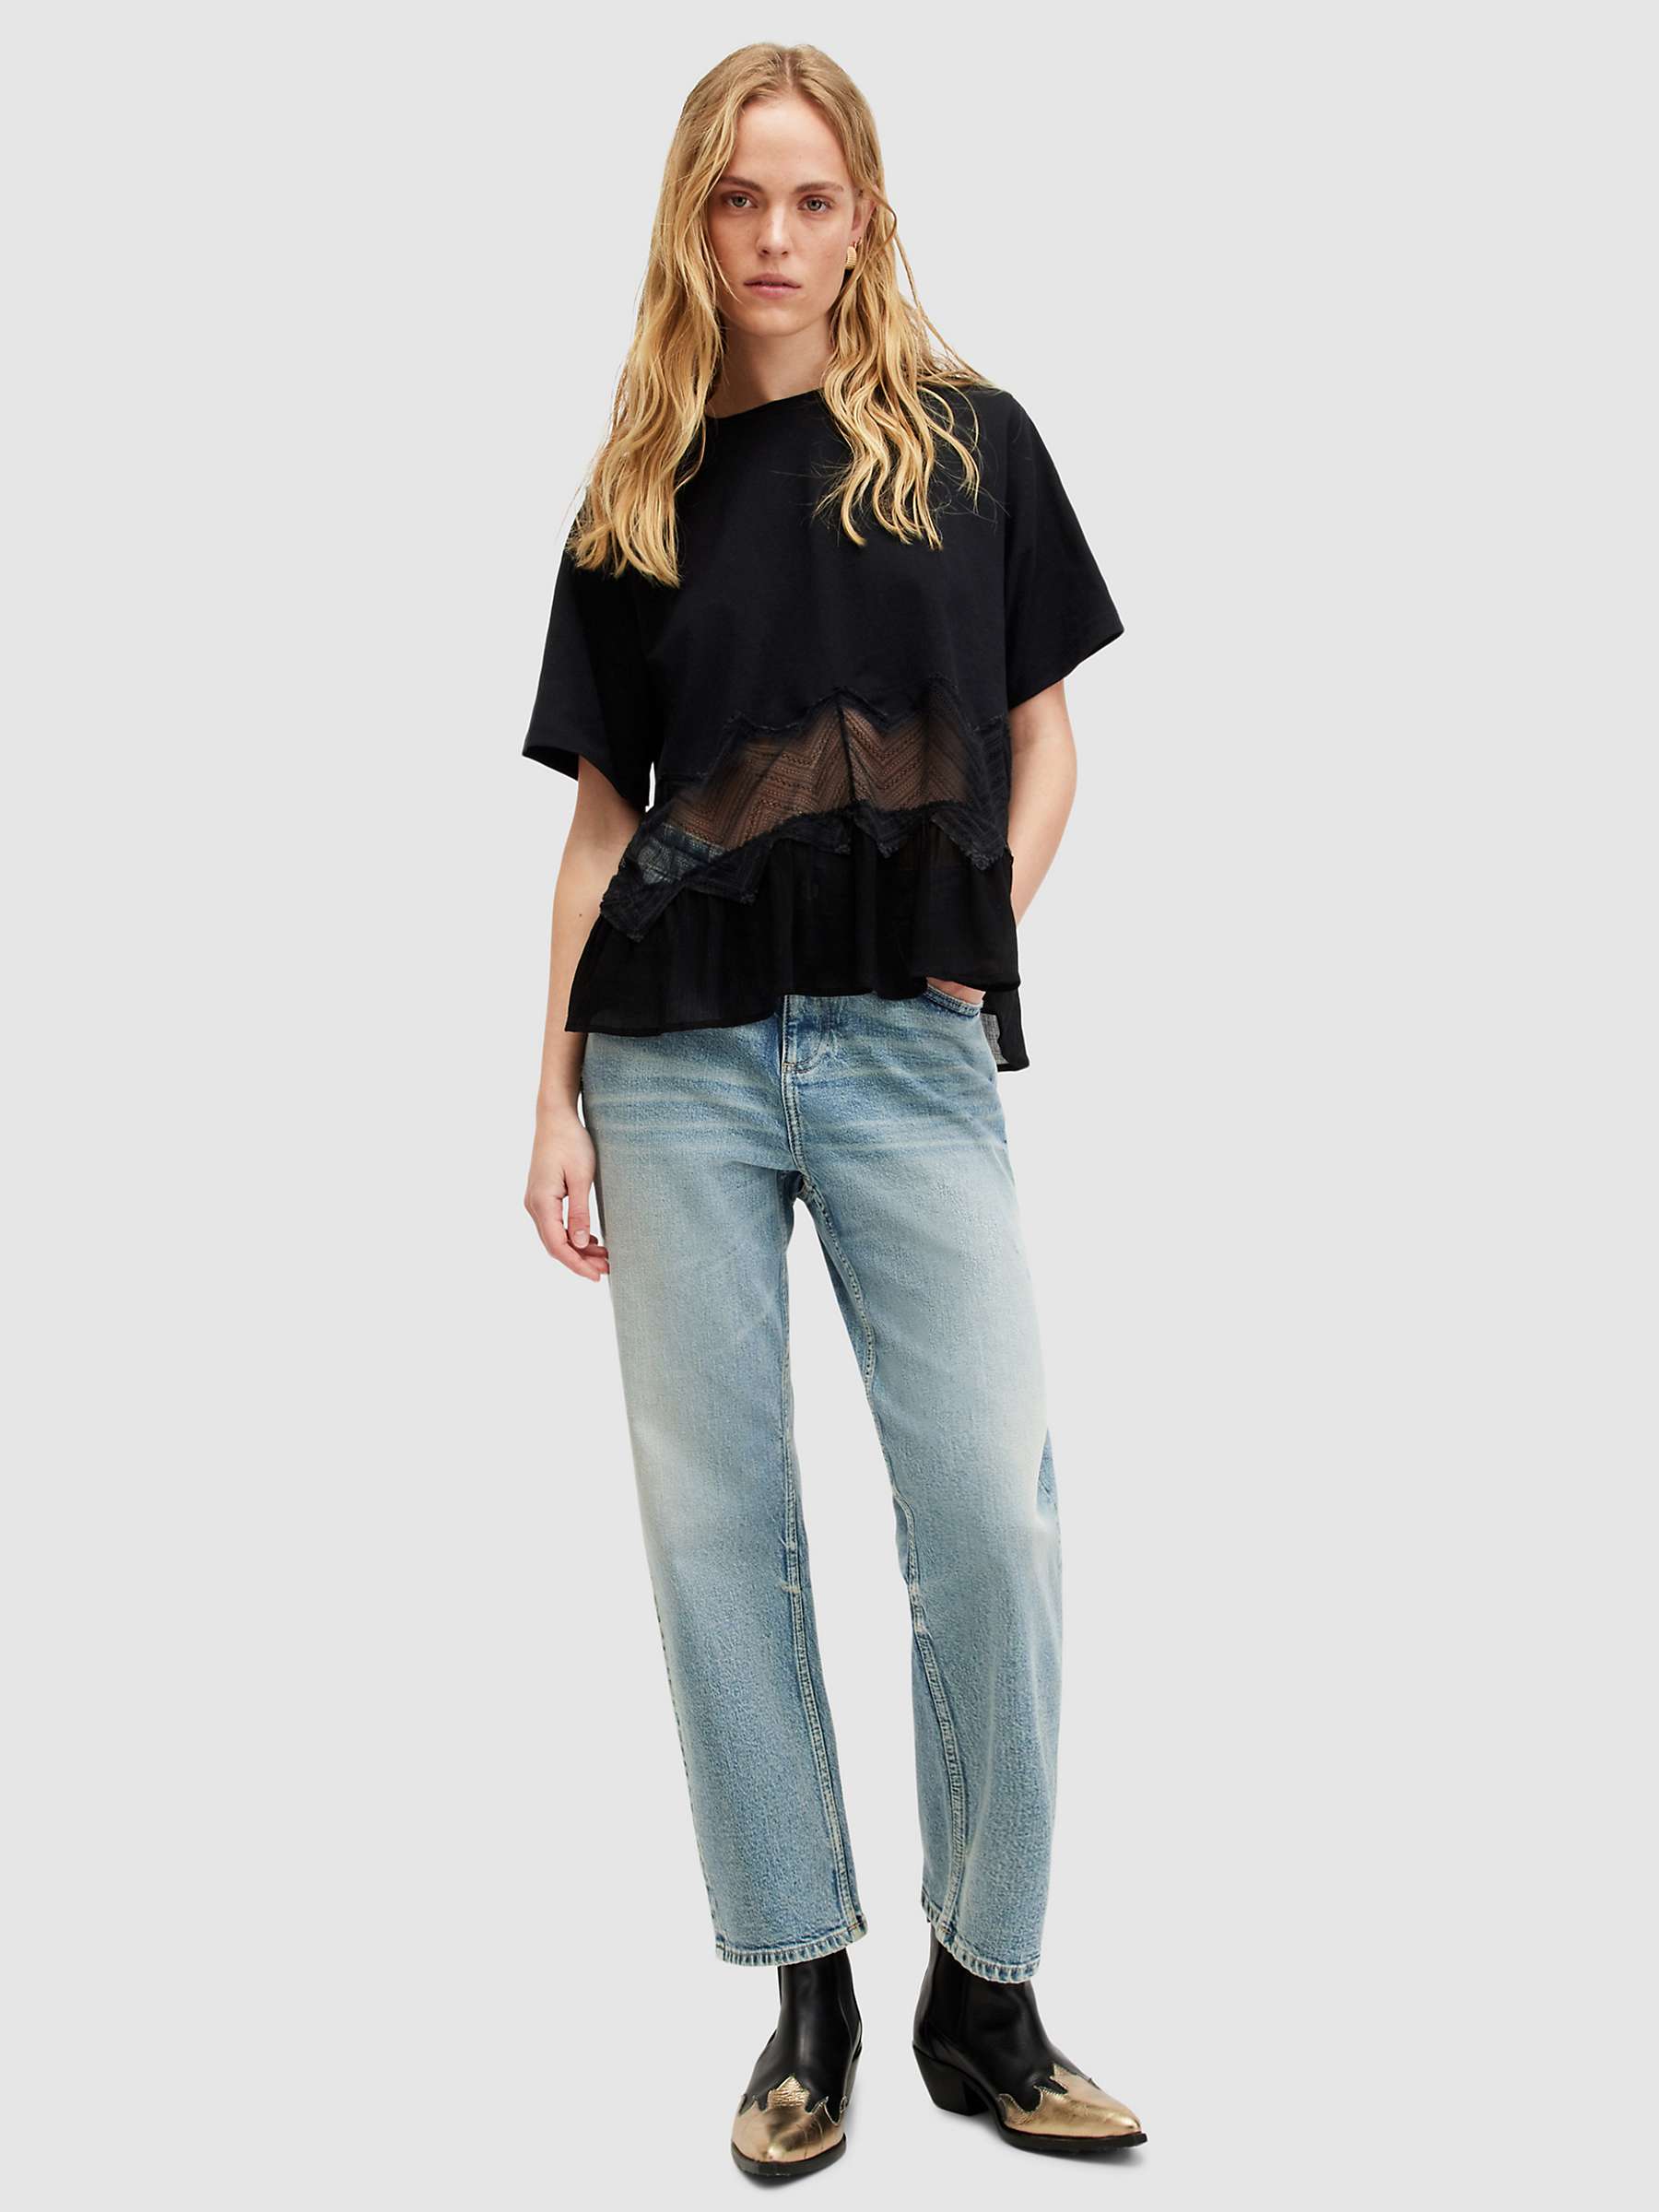 Buy AllSaints Gracie Lace Panel Oversized T-Shirt, Black Online at johnlewis.com